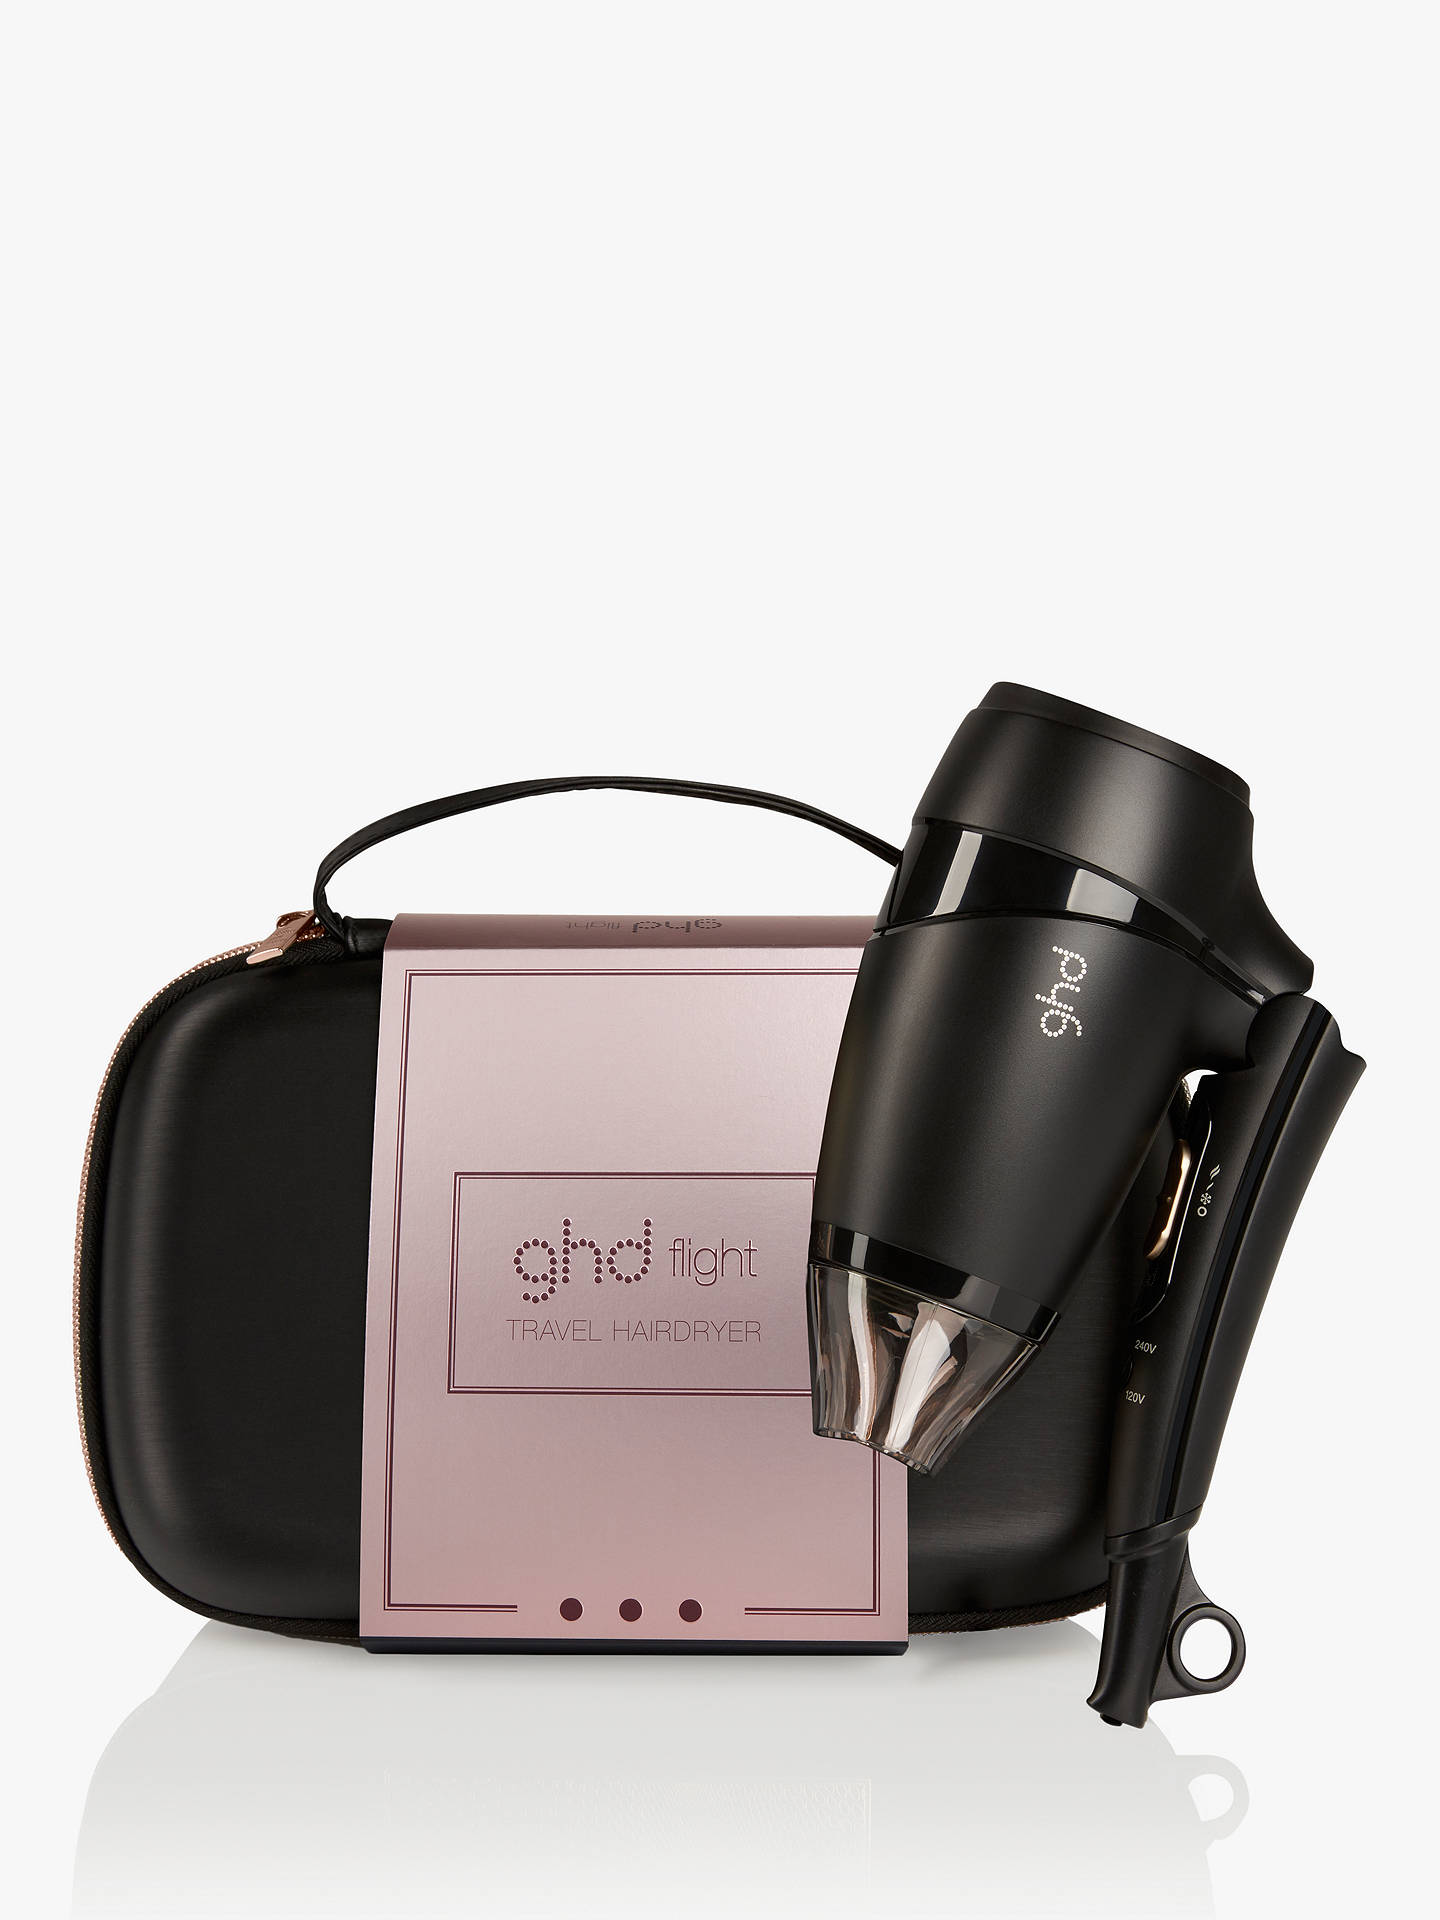 ghd hair dryer travel case